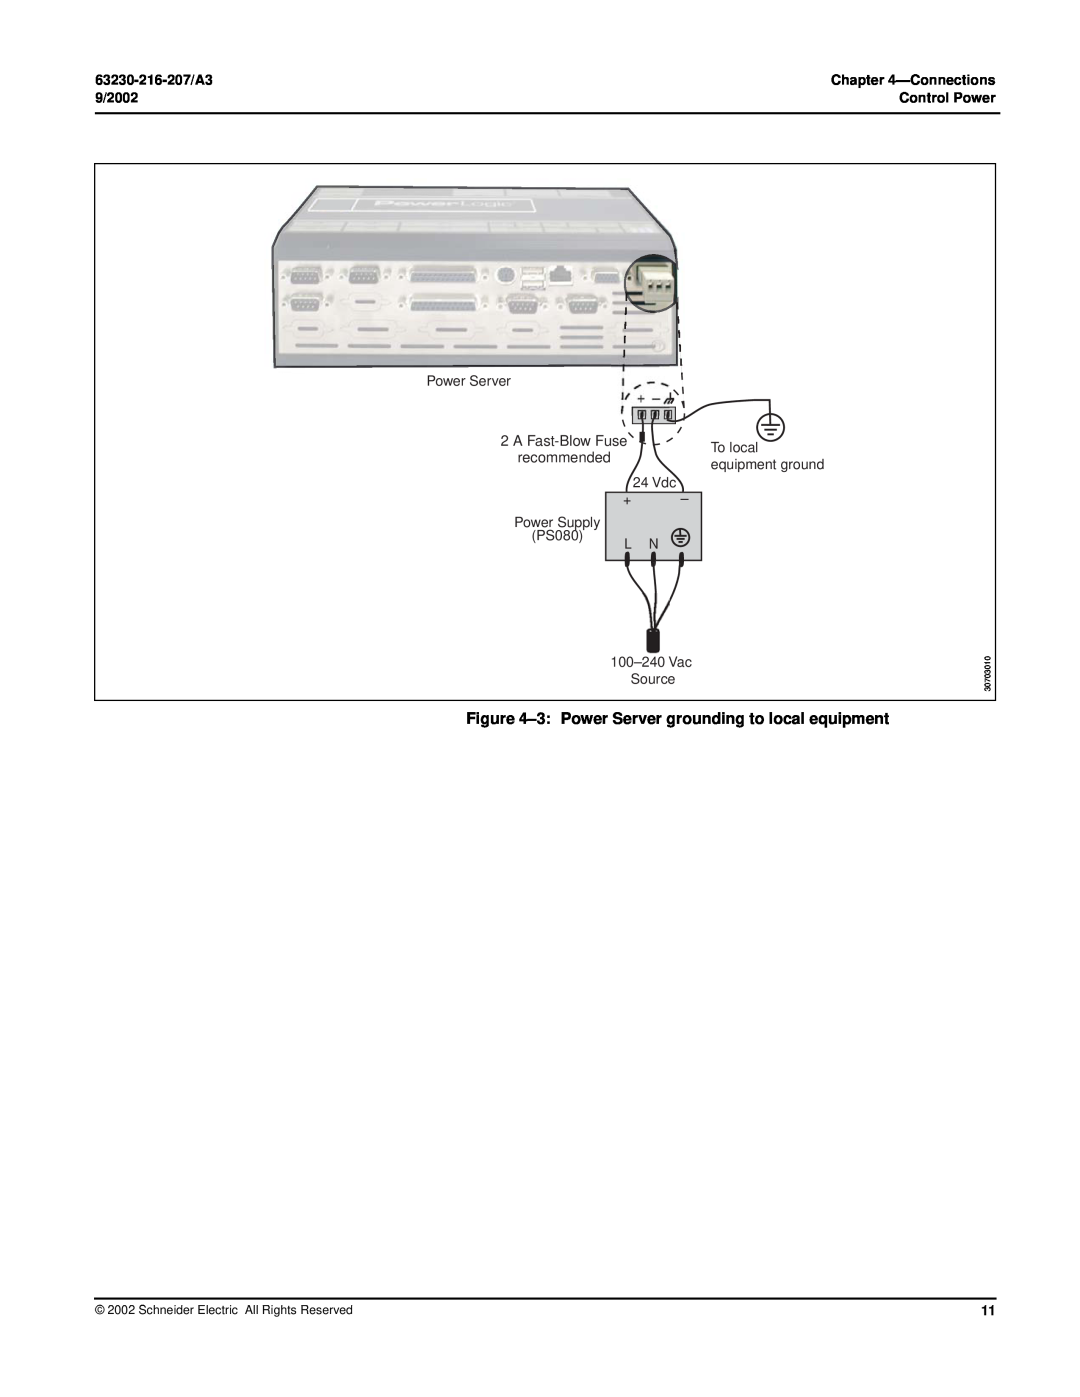 Schneider Electric PWRSRV750 3 Power Server grounding to local equipment, 63230-216-207/A3, 9/2002, Control Power 